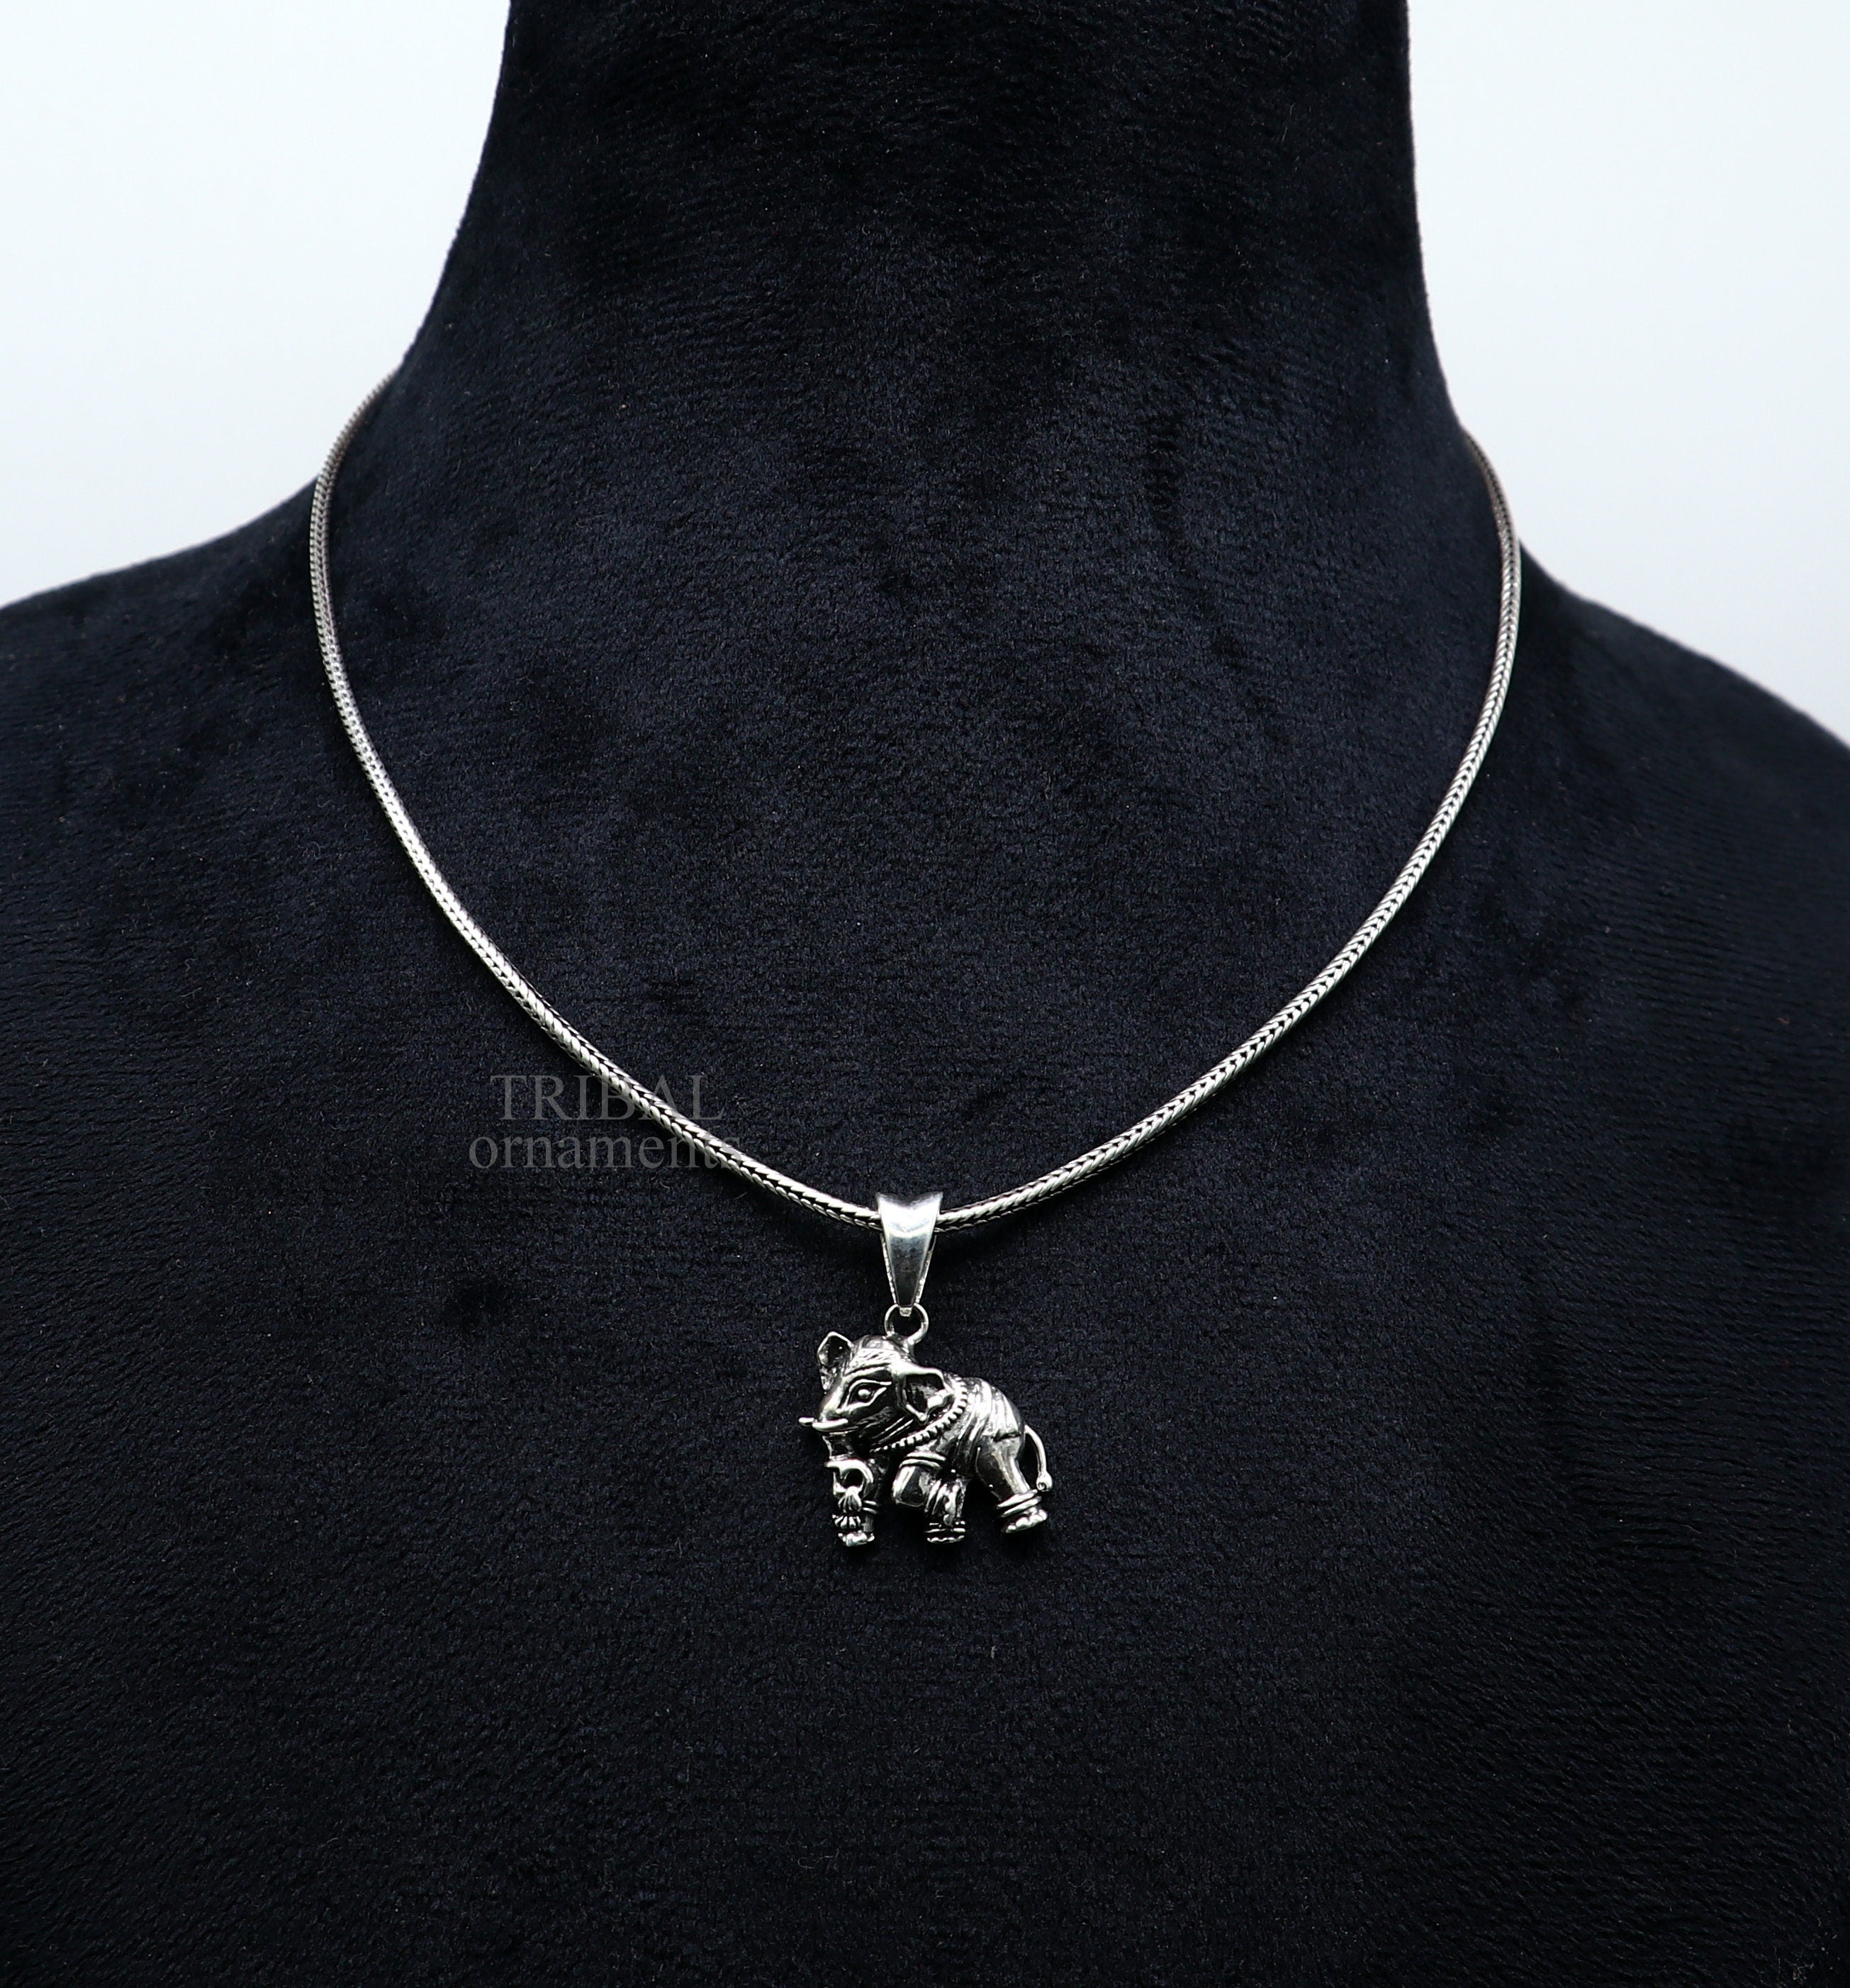 Buy Silver Necklaces & Pendants for Women by Mannash Online | Ajio.com